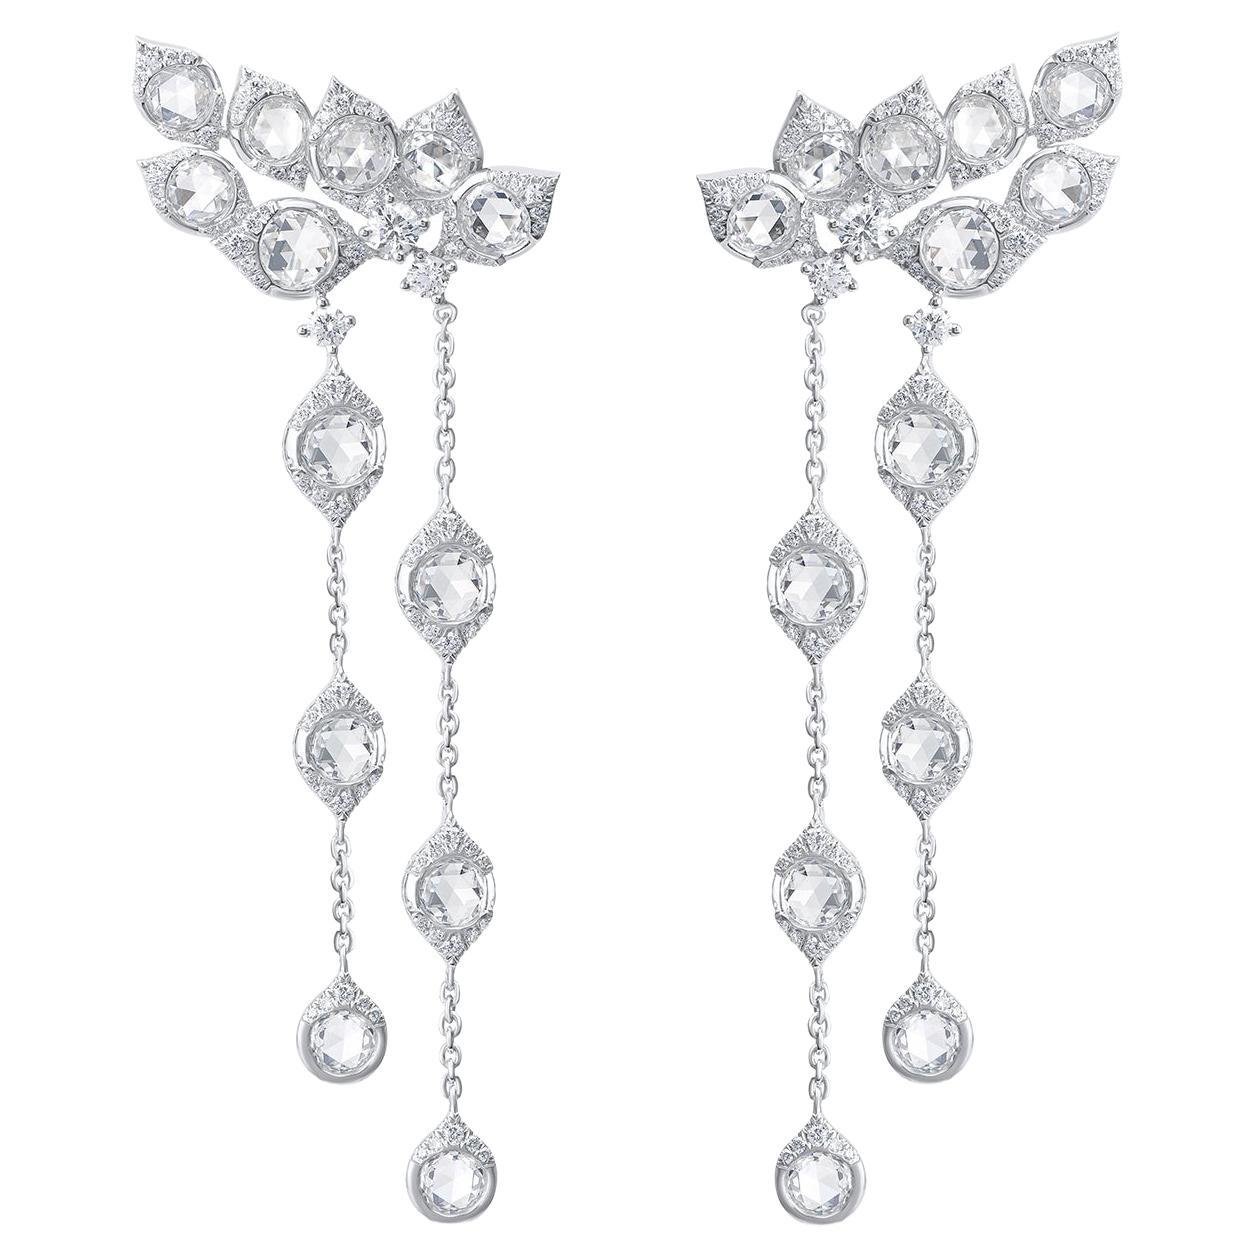 Harakh Colorless Diamond 3 1/4 Carat Dangling Earrings in 18 KT White Gold